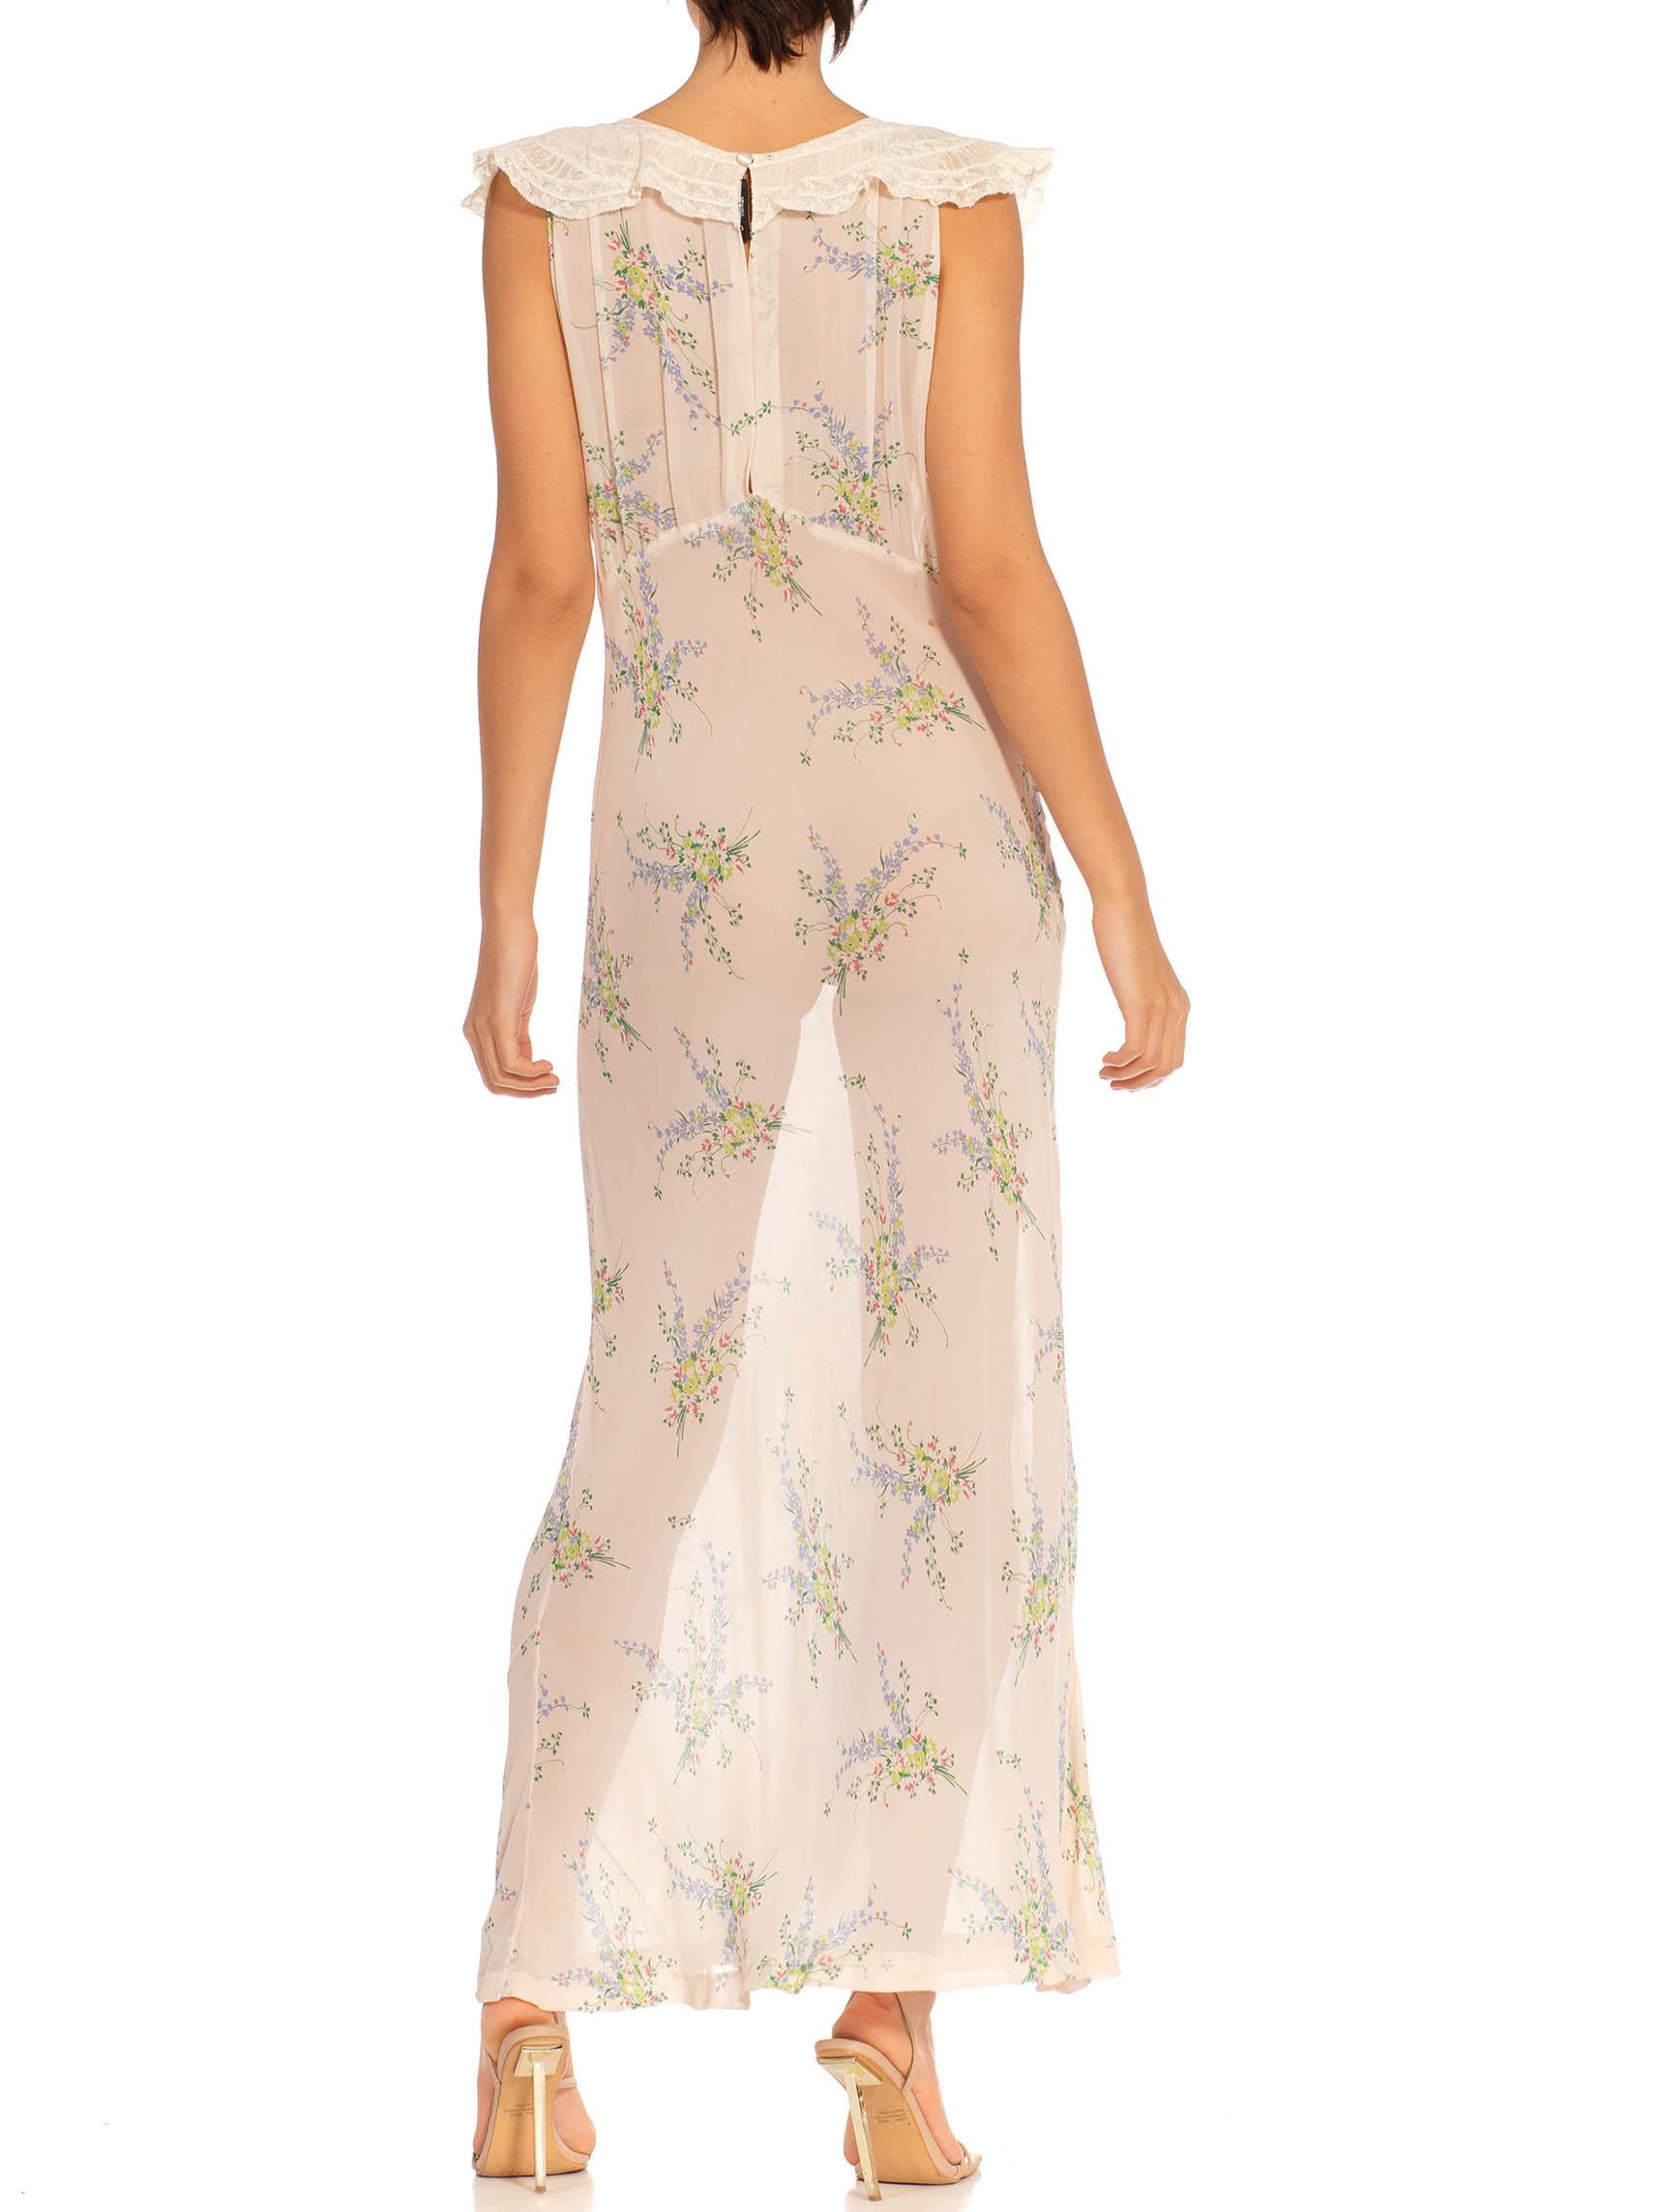 1930S White & Blue Nylon Floral Slip Dress With Lace Trim Neckline For Sale 4